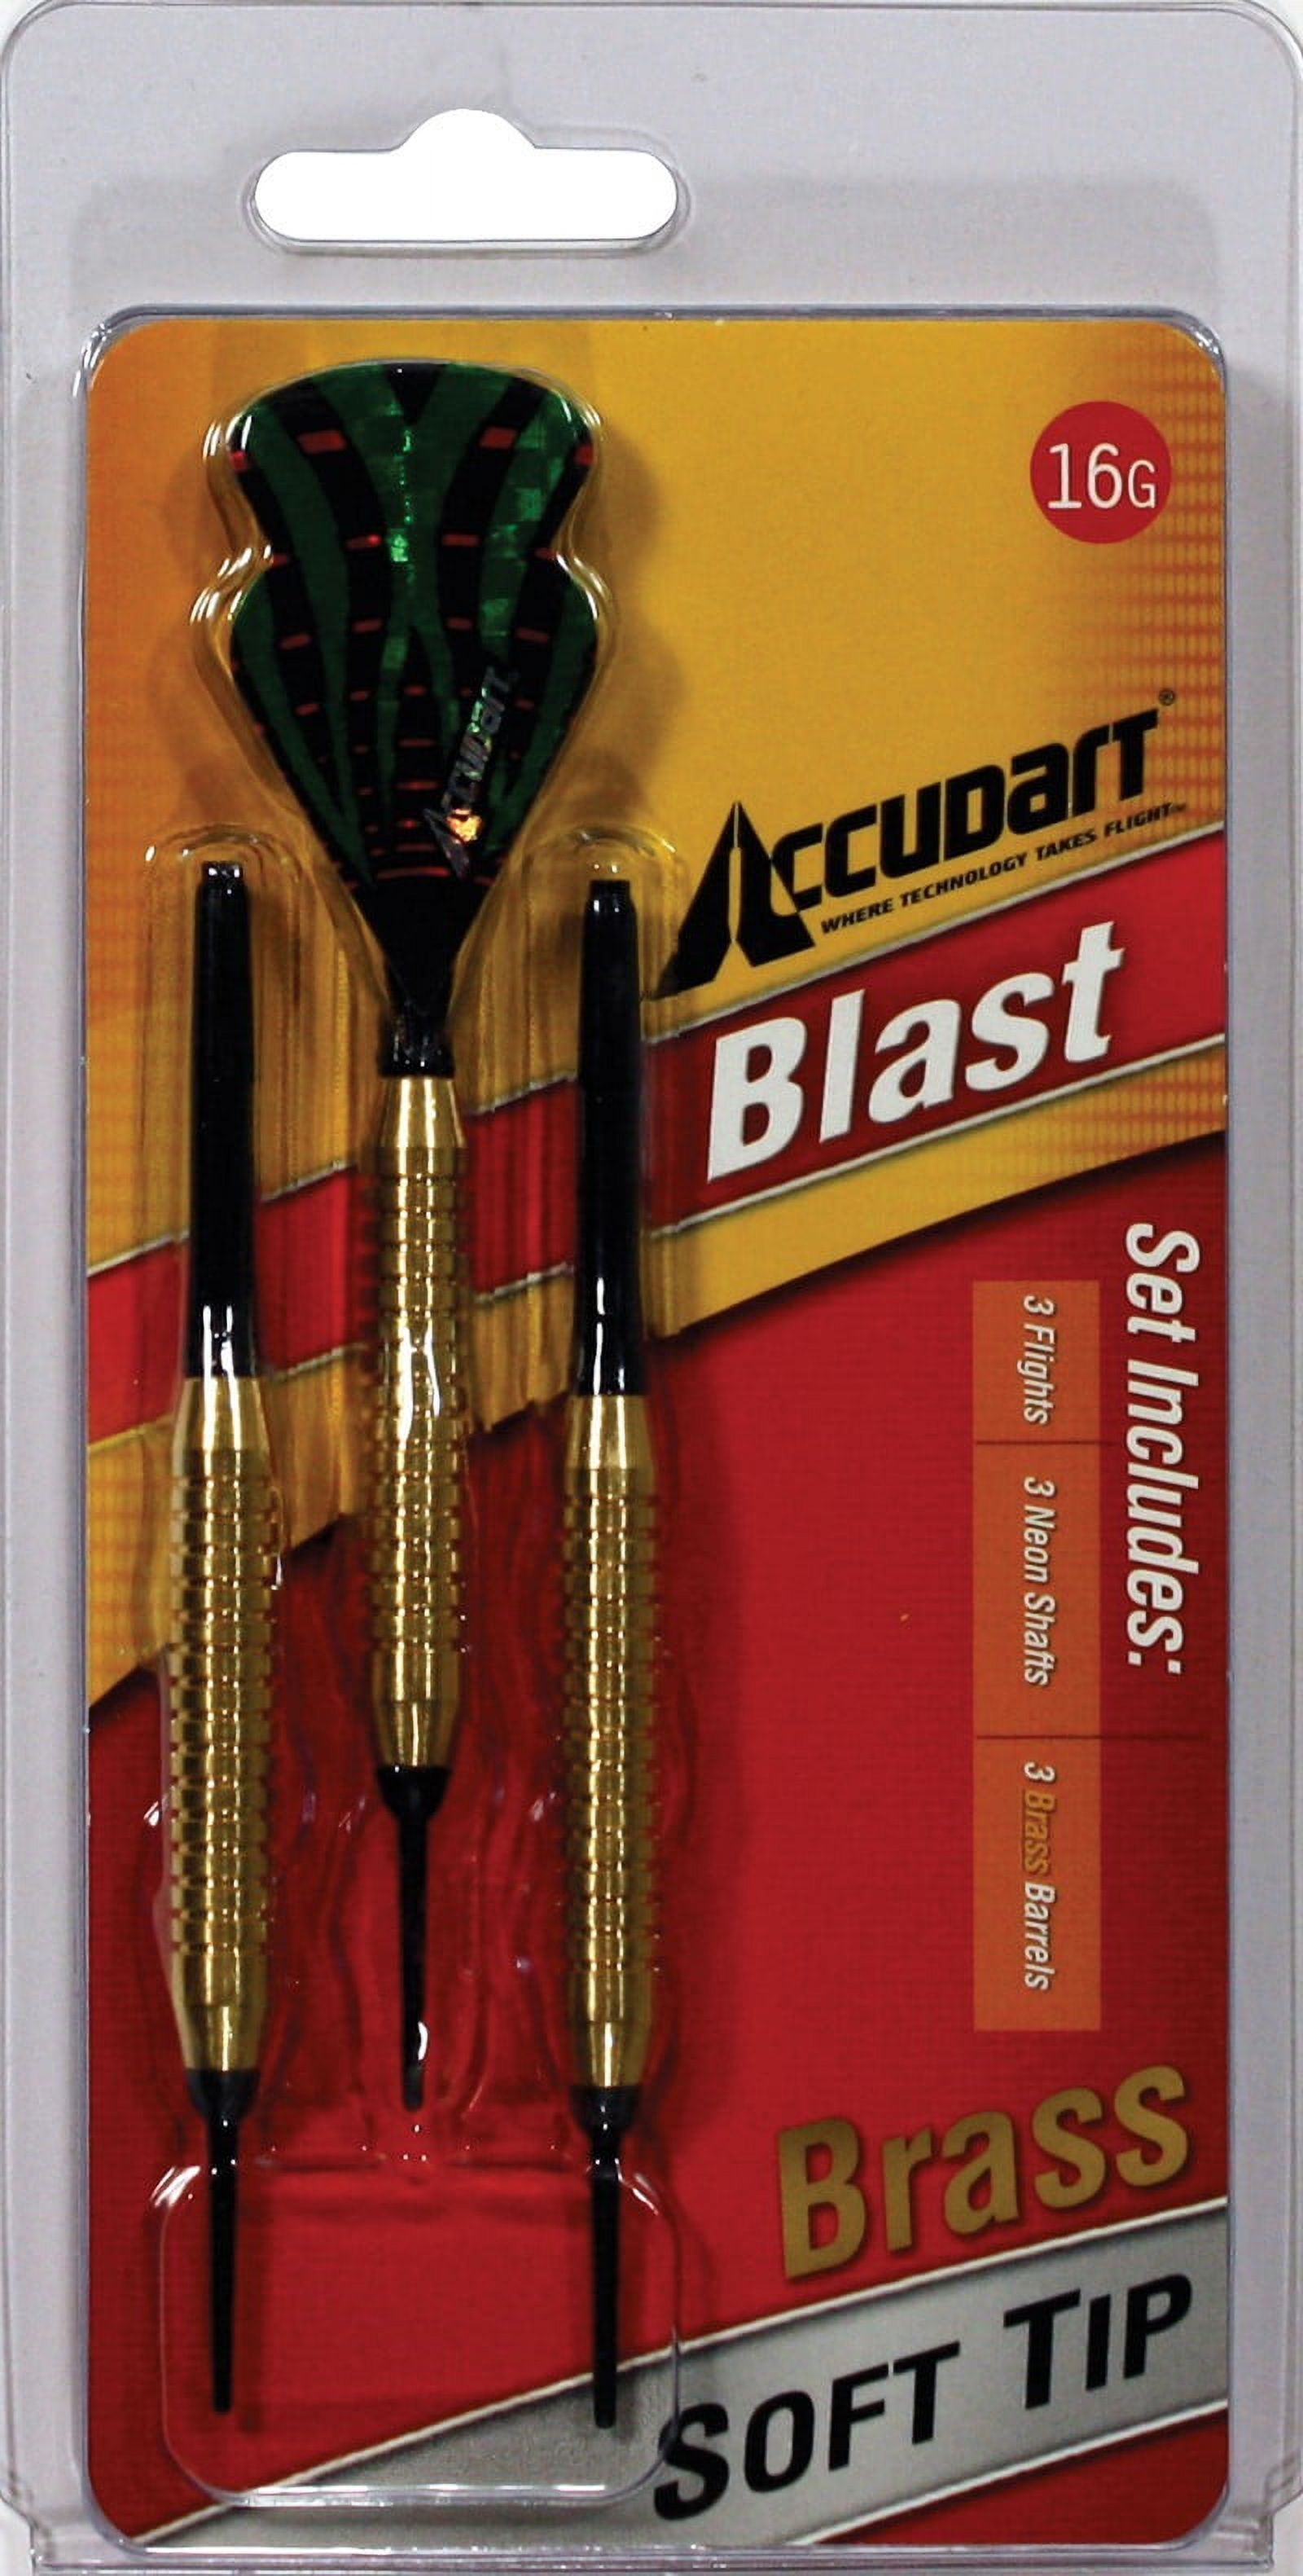 Accudart Blast Brass Dart Set - image 2 of 2